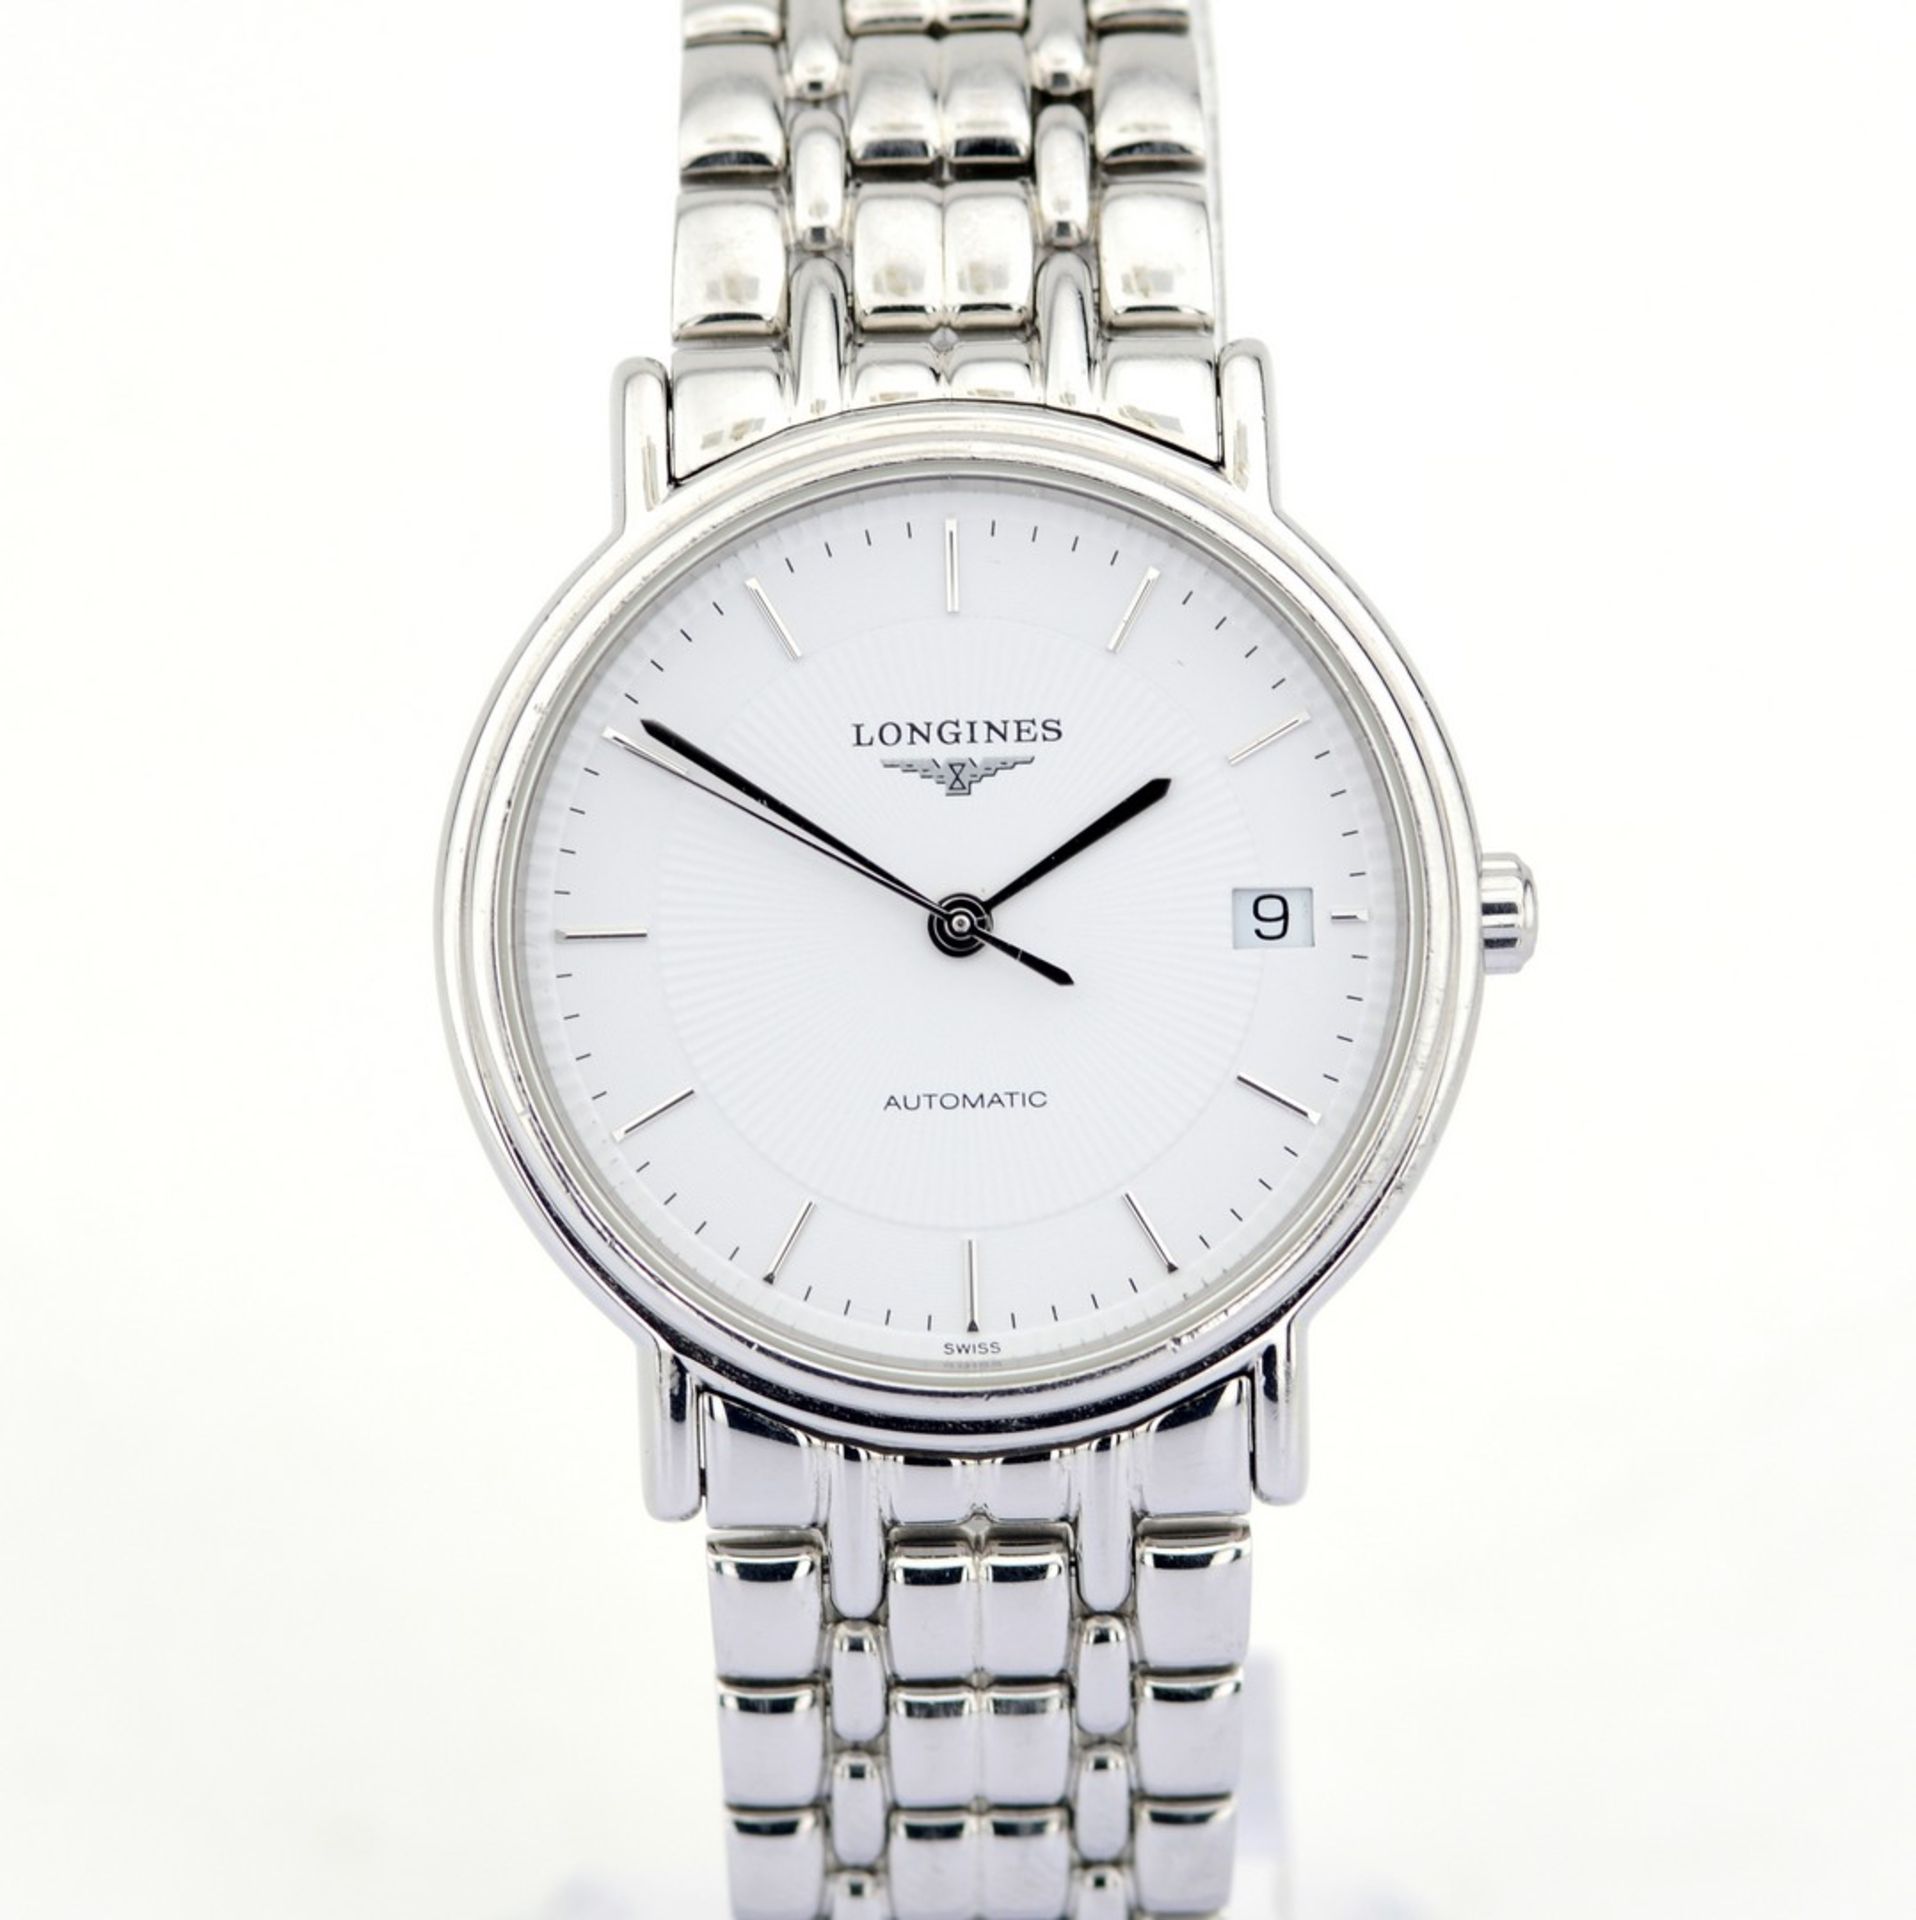 Longines / Presence Automatic Date 34 mm - Gentlemen's Steel Wristwatch - Image 3 of 7